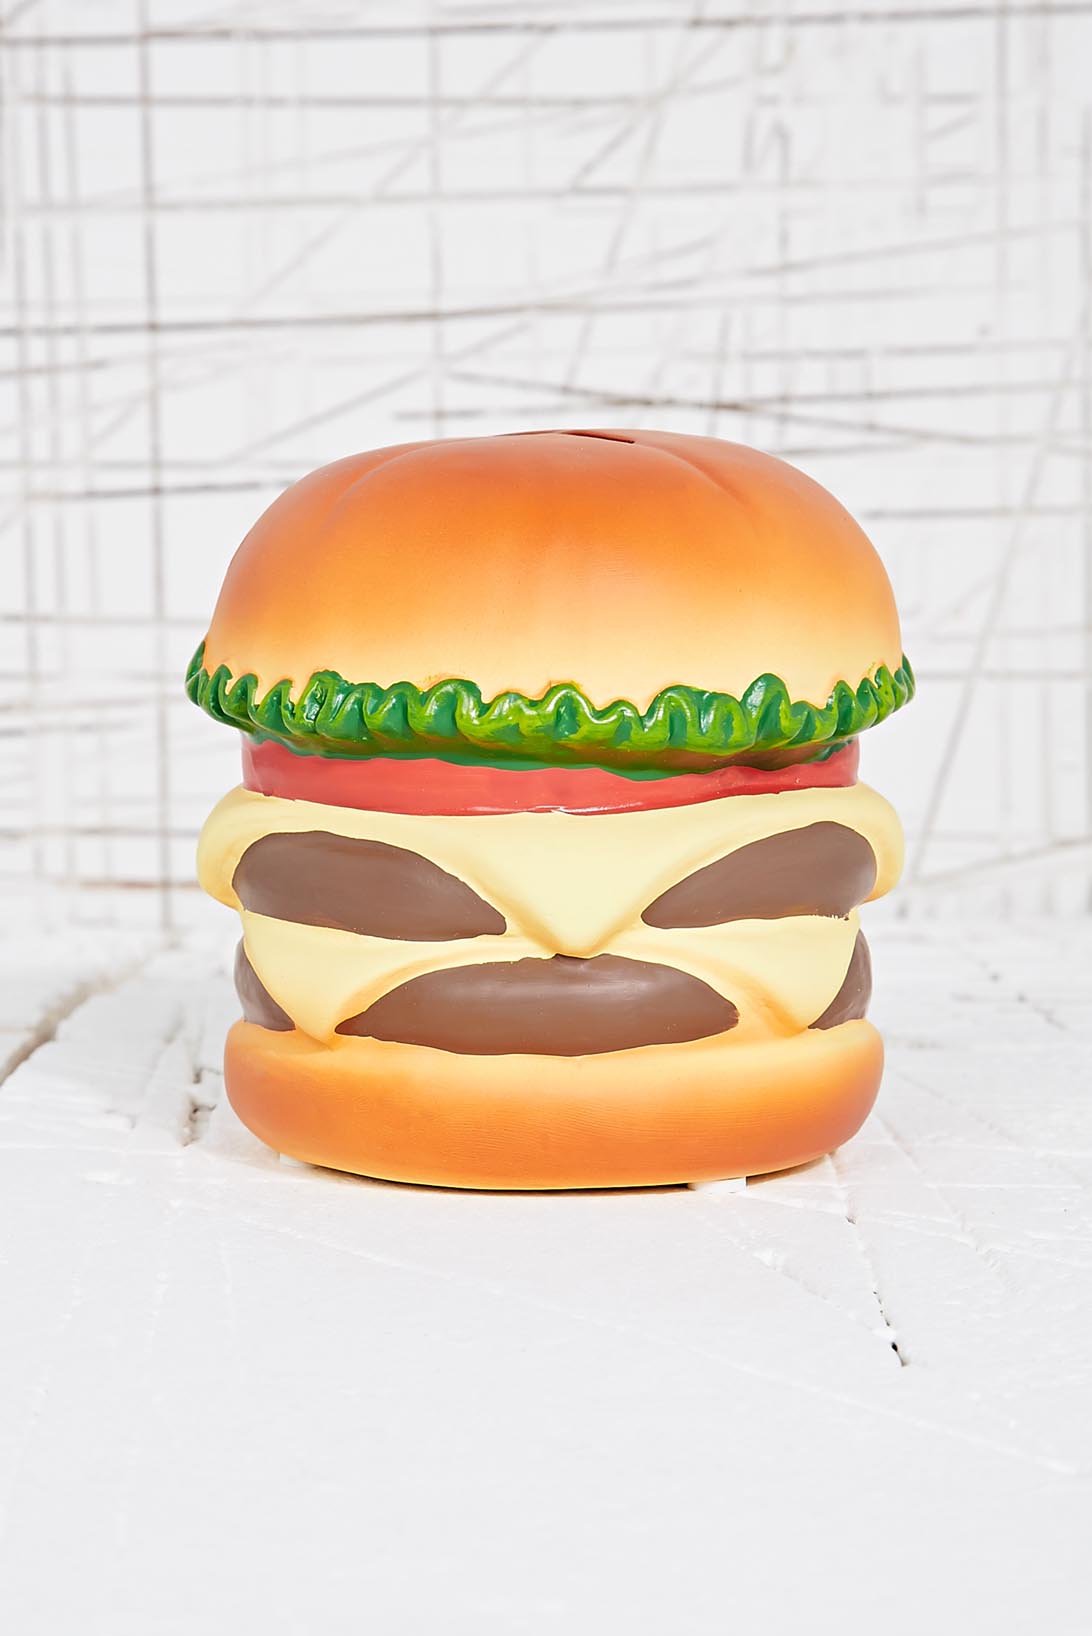 Tirelire hamburger Urban Outfitters - 20€